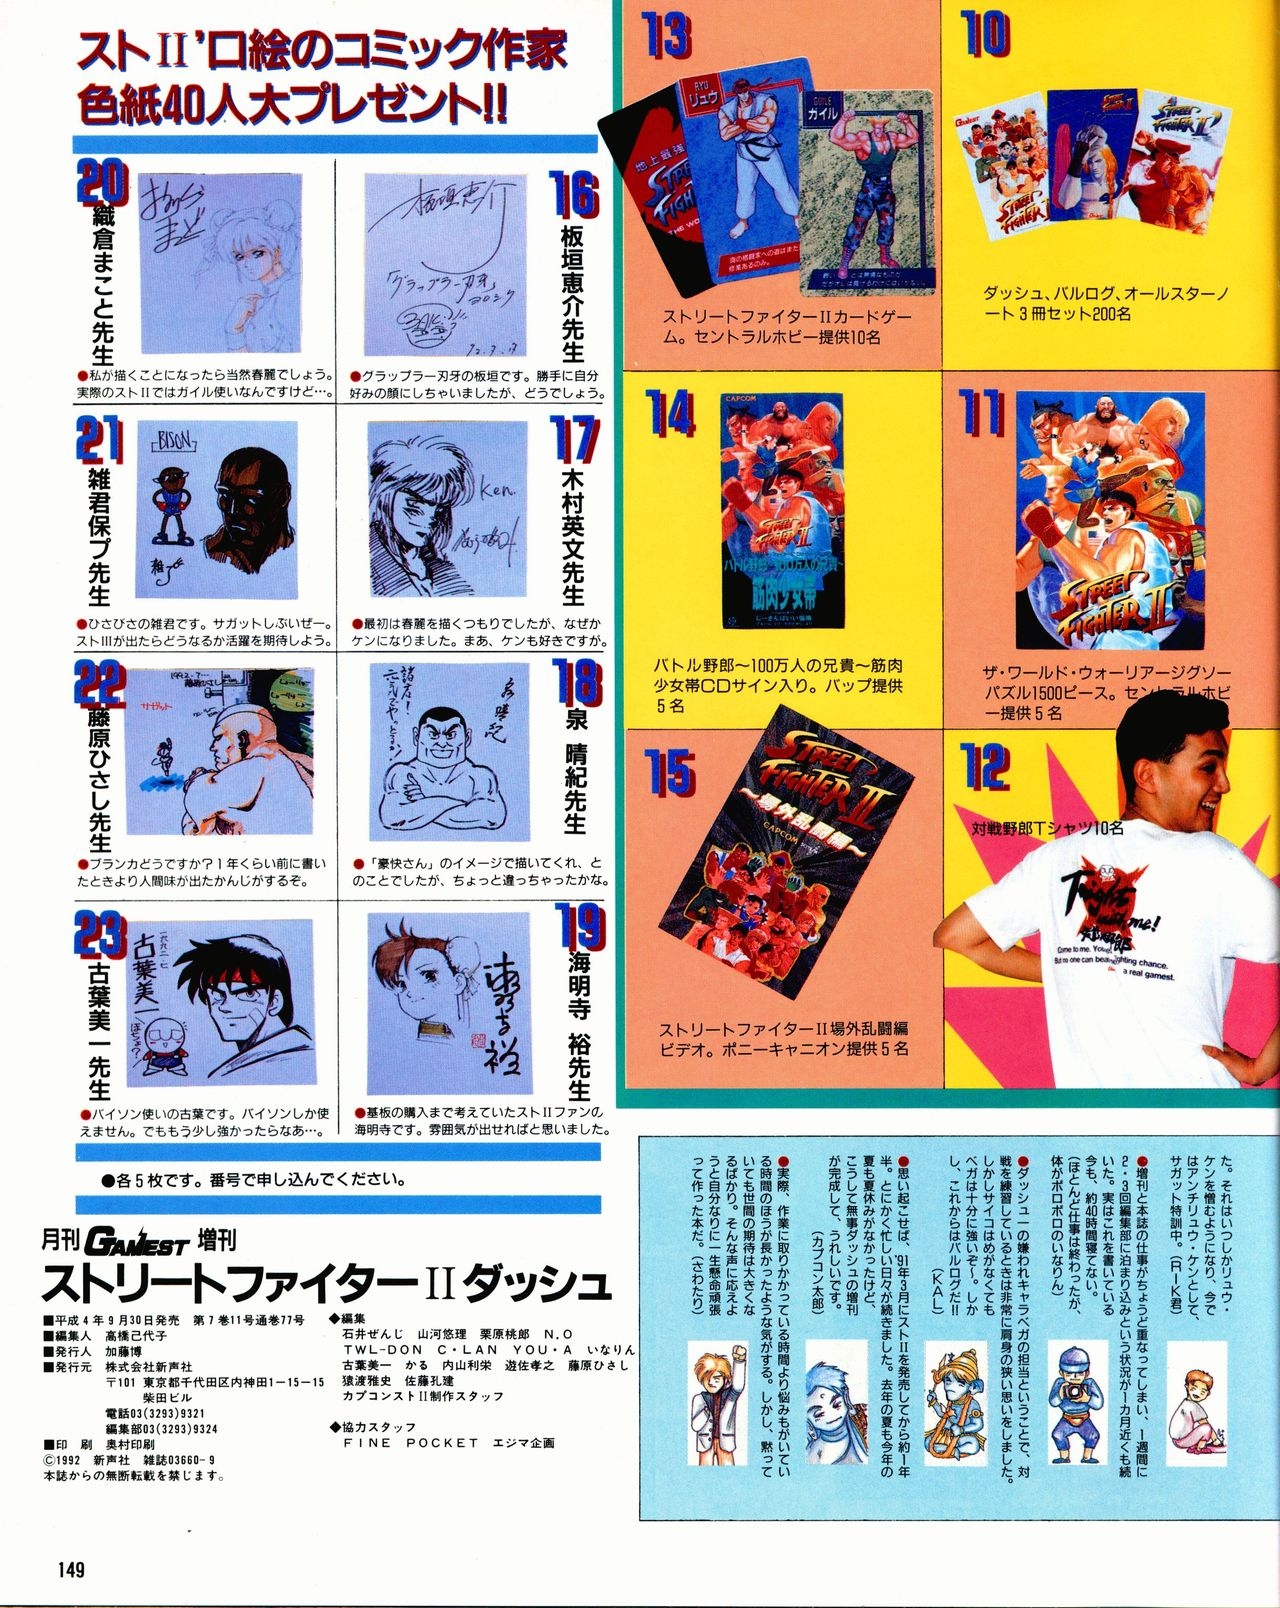 Street Fighter II Dash - Gamest special issue 77 150